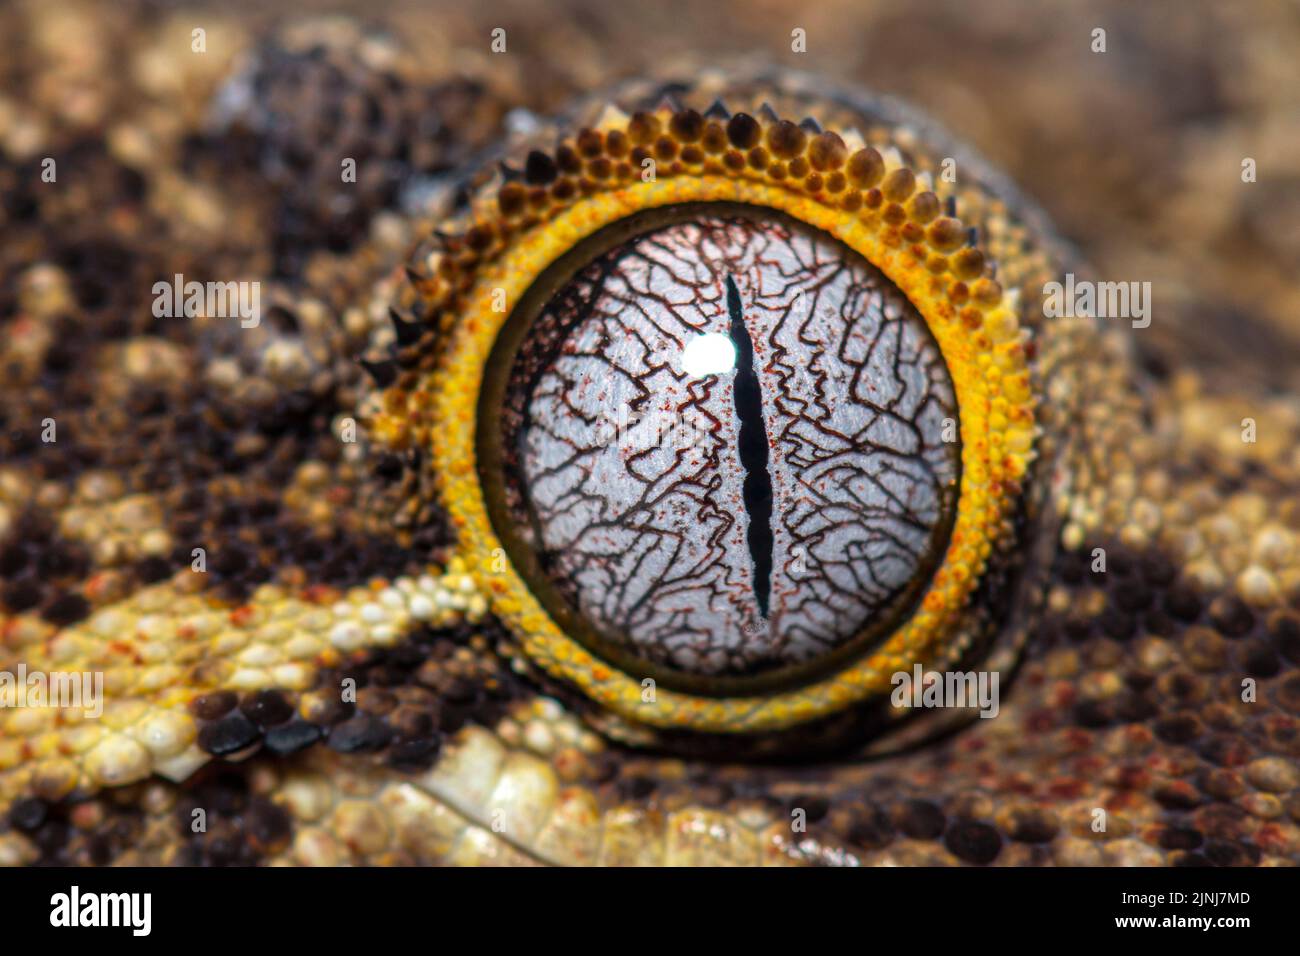 Close-up on a reptile eye, New Caledonia bumpy gecko, Rhacodactylus auriculatus Stock Photo